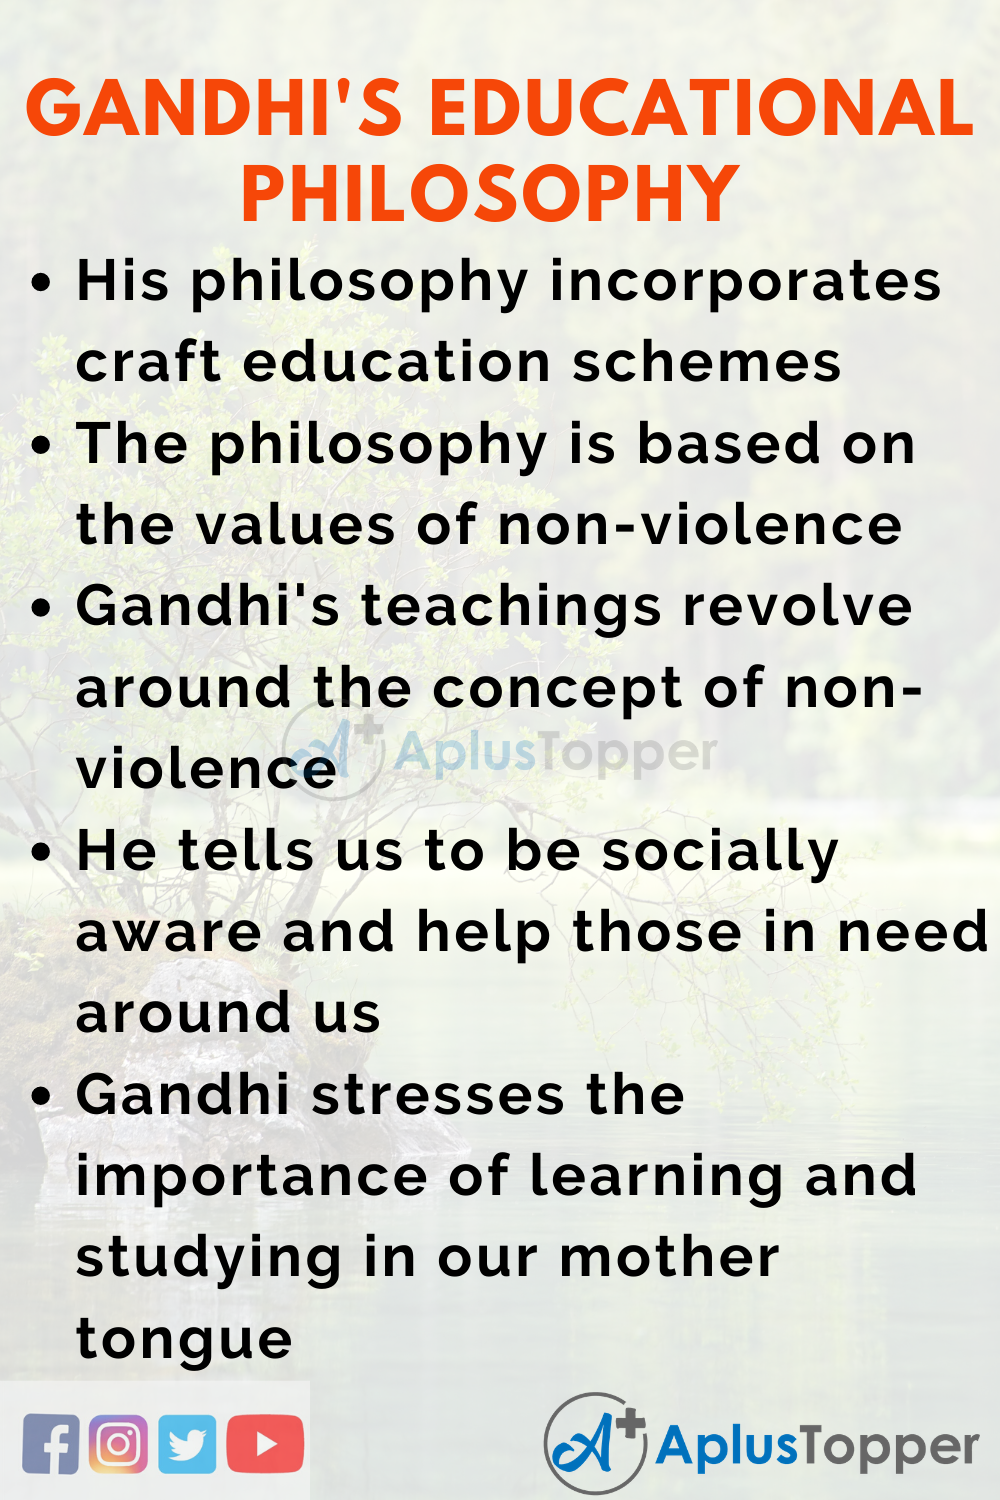 mahatma gandhi essay his education